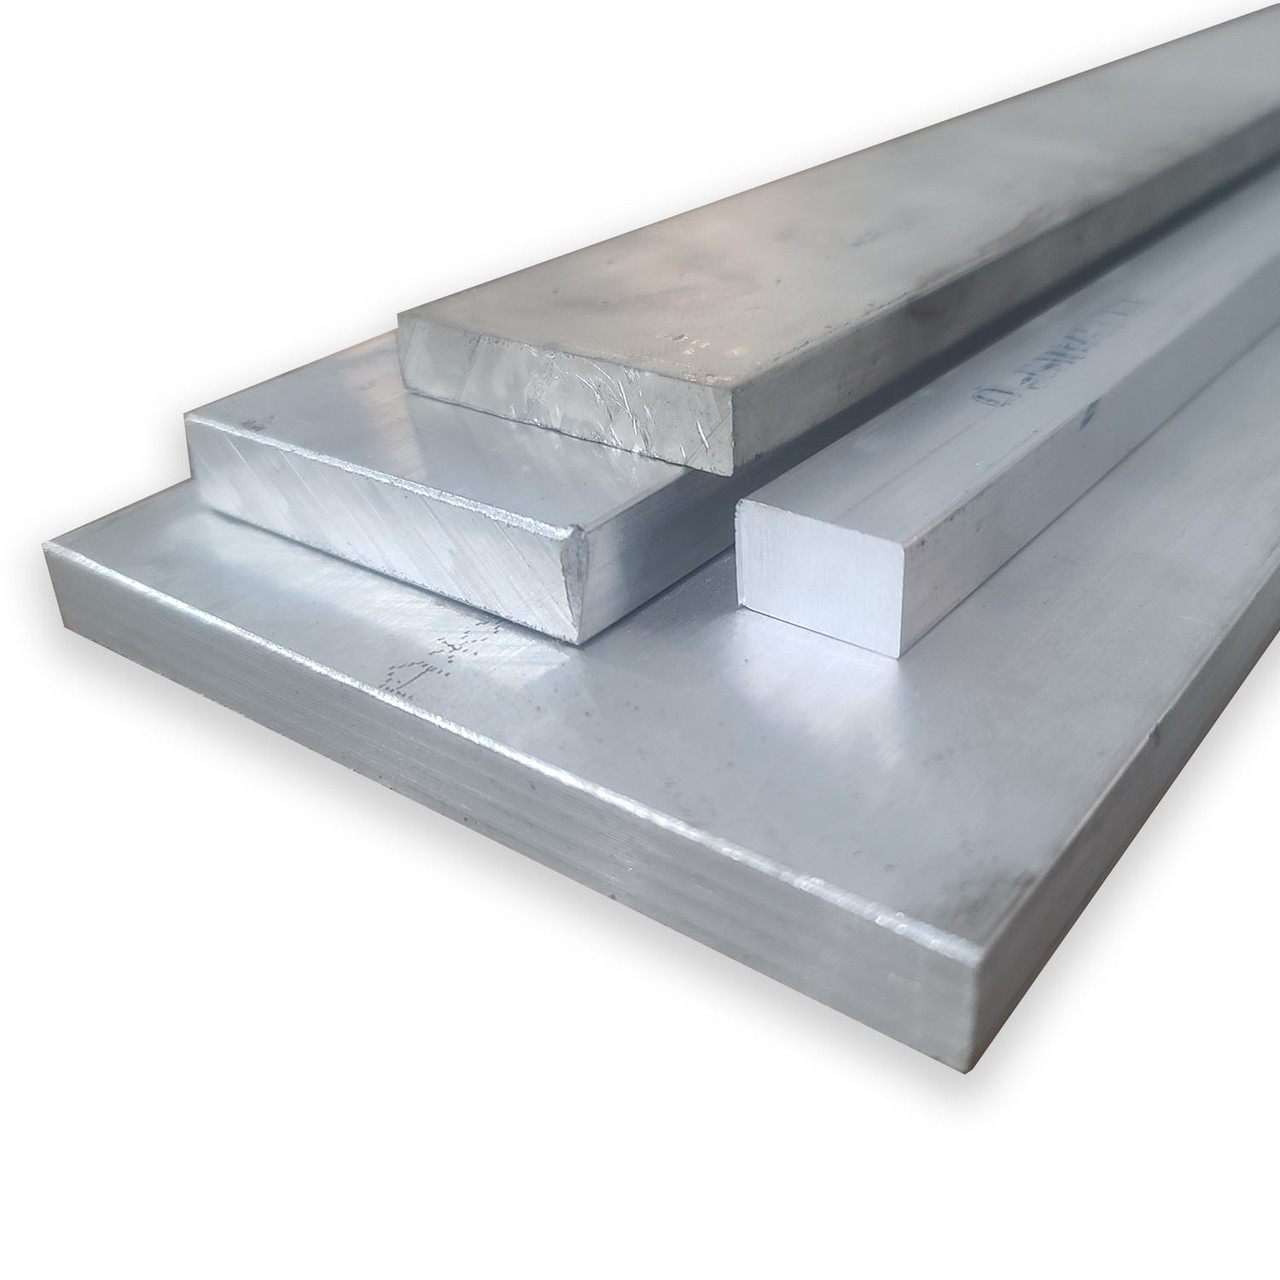 0.375" x 2" x 72", 2024-T4 Aluminum Flat Bar